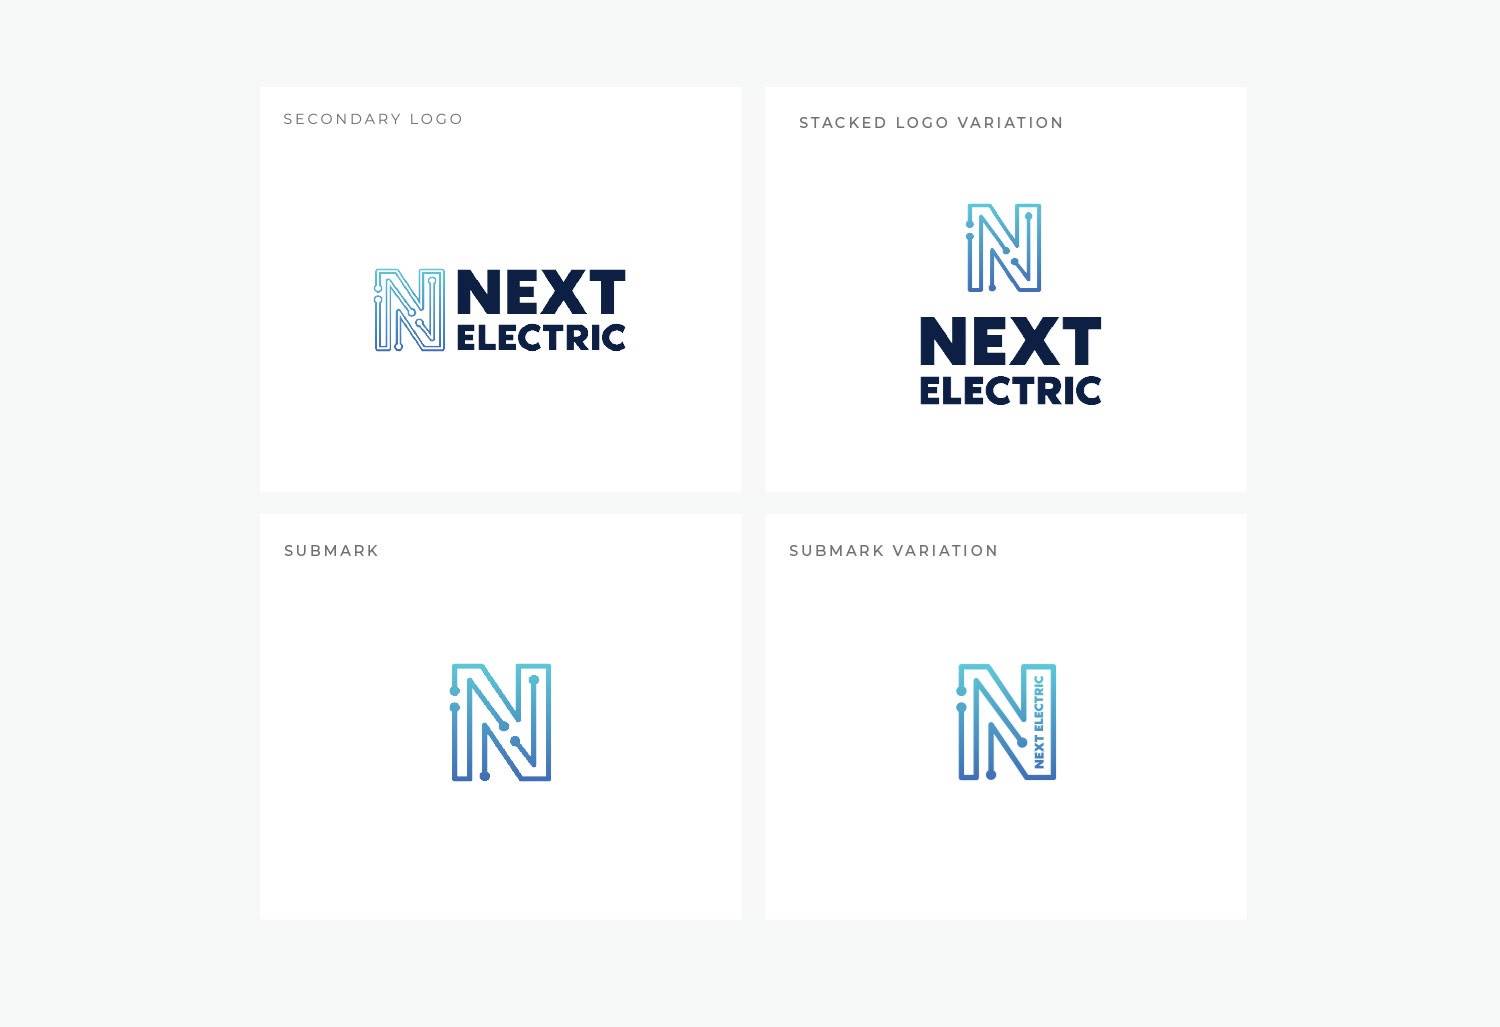 Next Electric logo variations